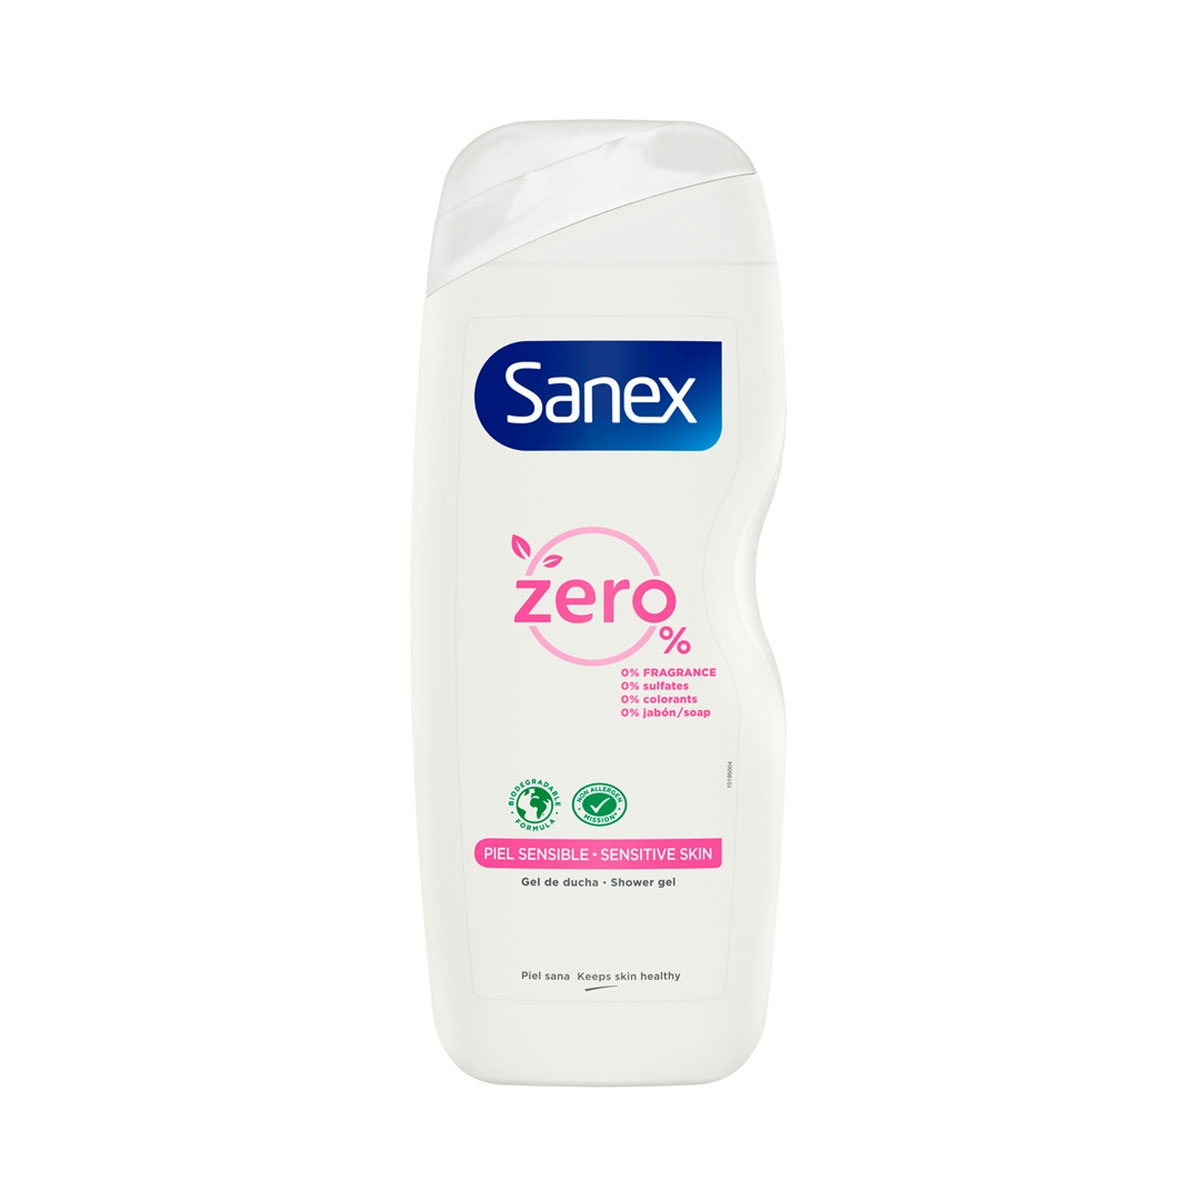 Gel Sanex zero% piel sensible 600ml